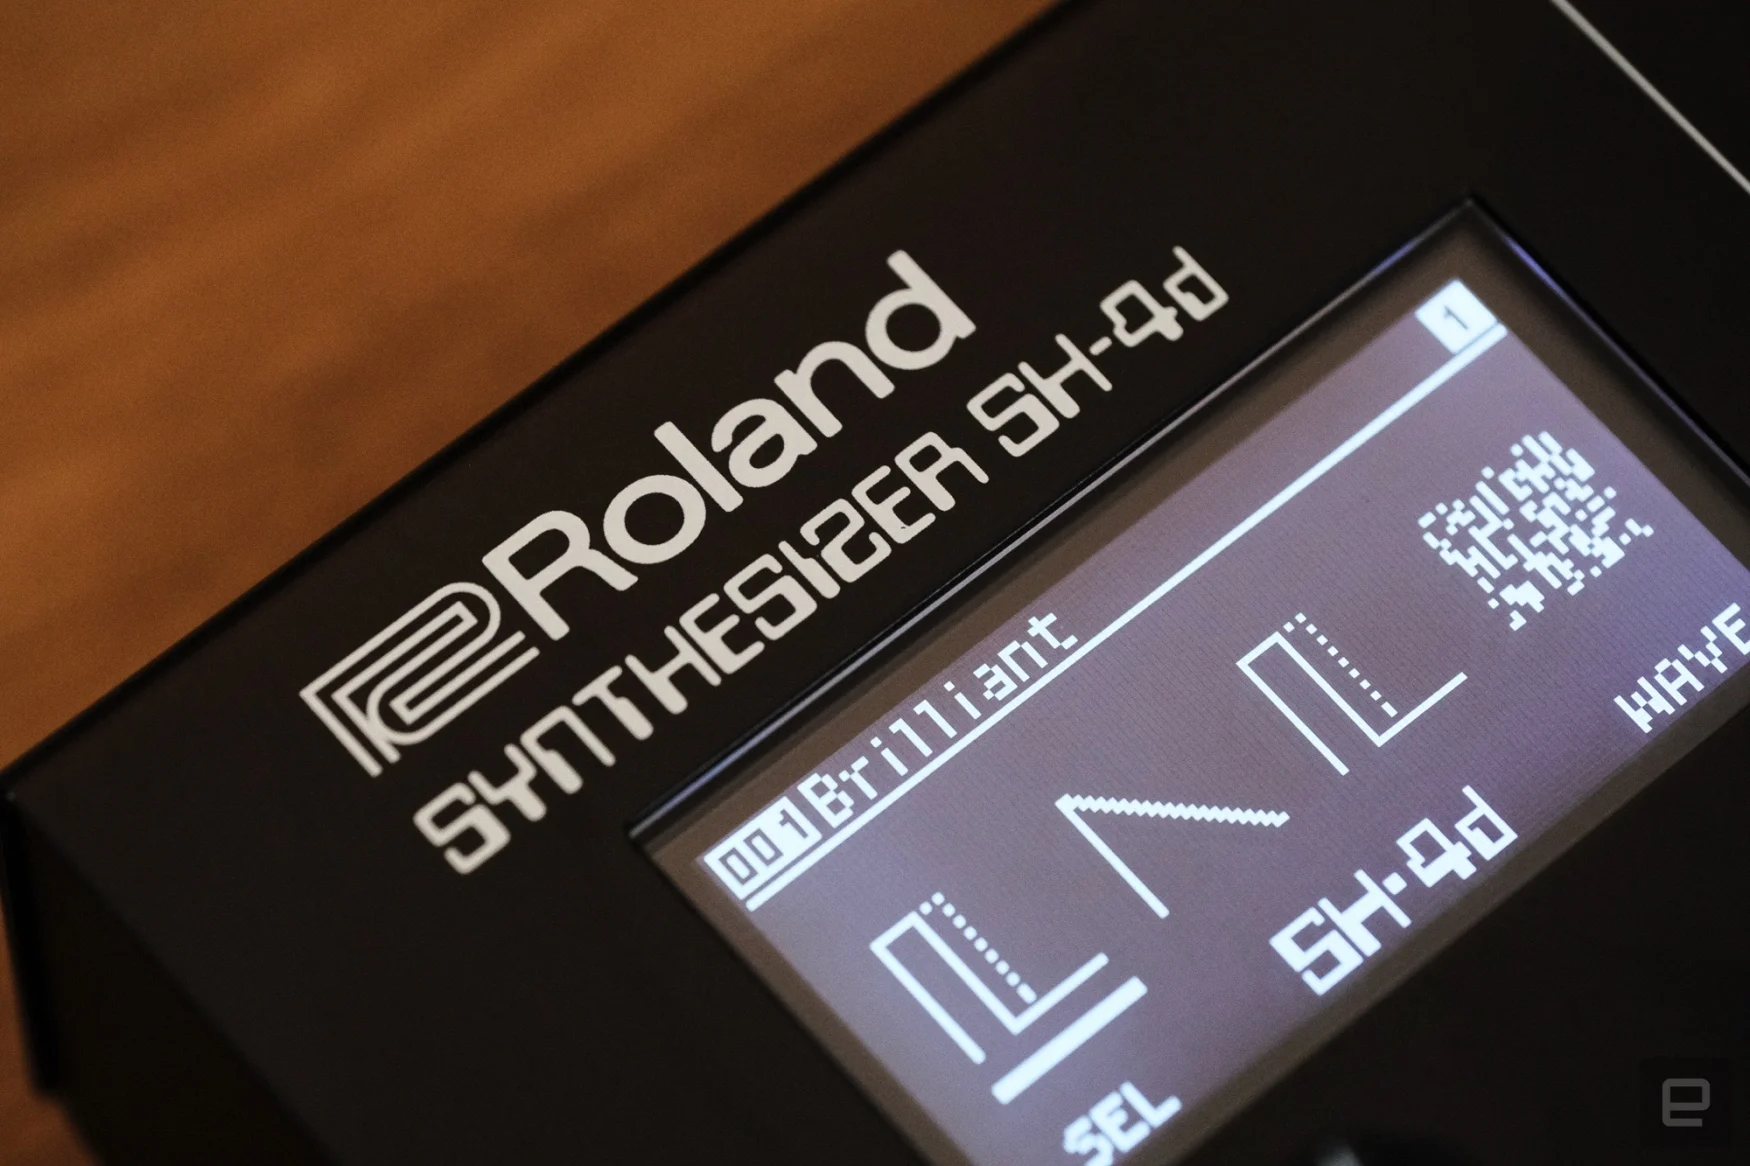 Close up of the Roland SH-4d logo.